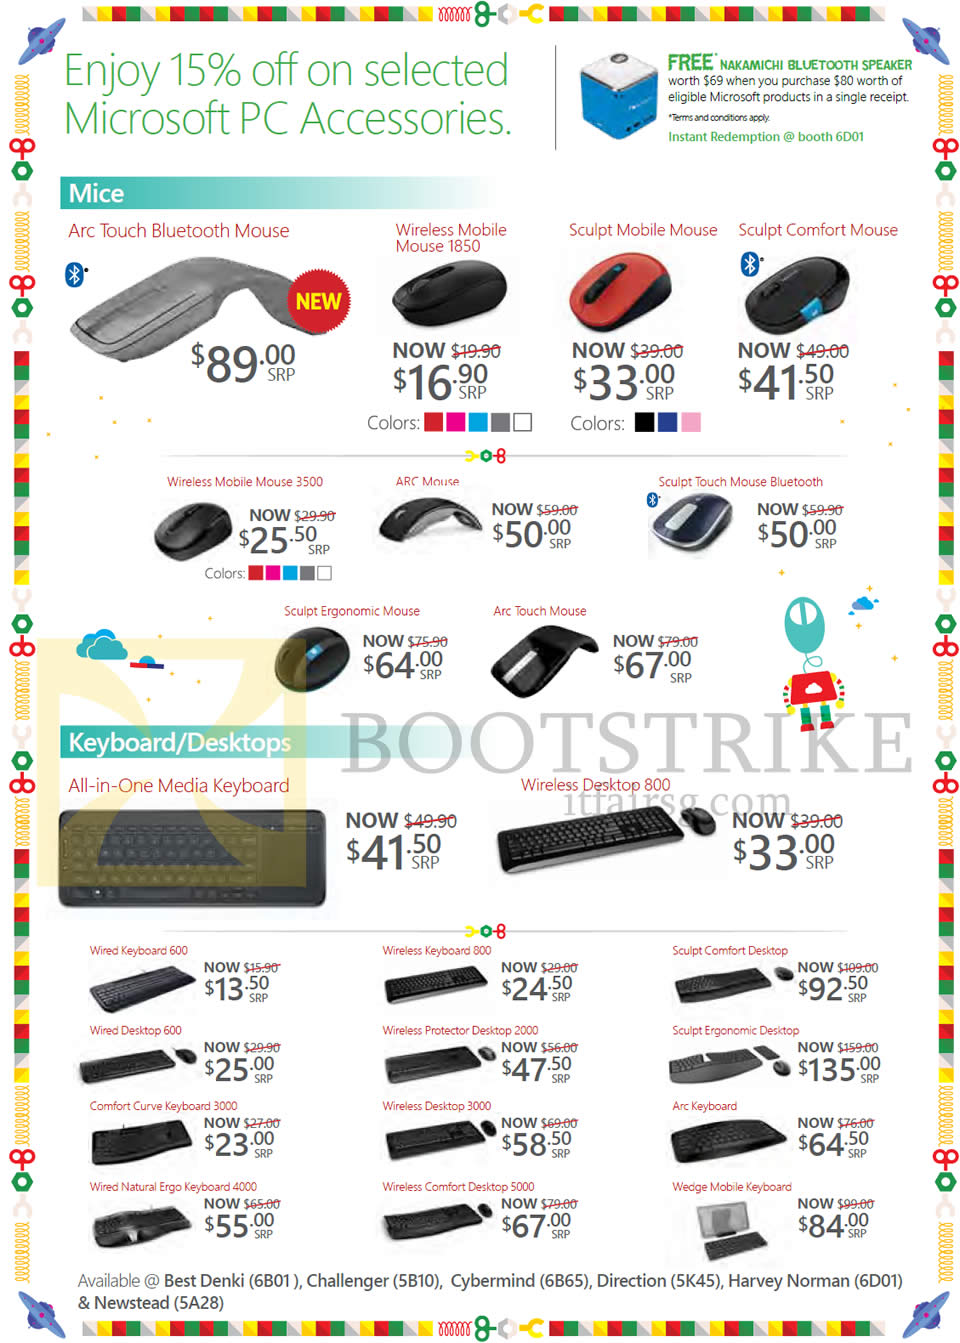 SITEX 2014 price list image brochure of Microsoft Hardware Accessories Mouse, Keyboards, Wireless, Sculpt, Arc, Sculpt Ergonomic, Arc Touch